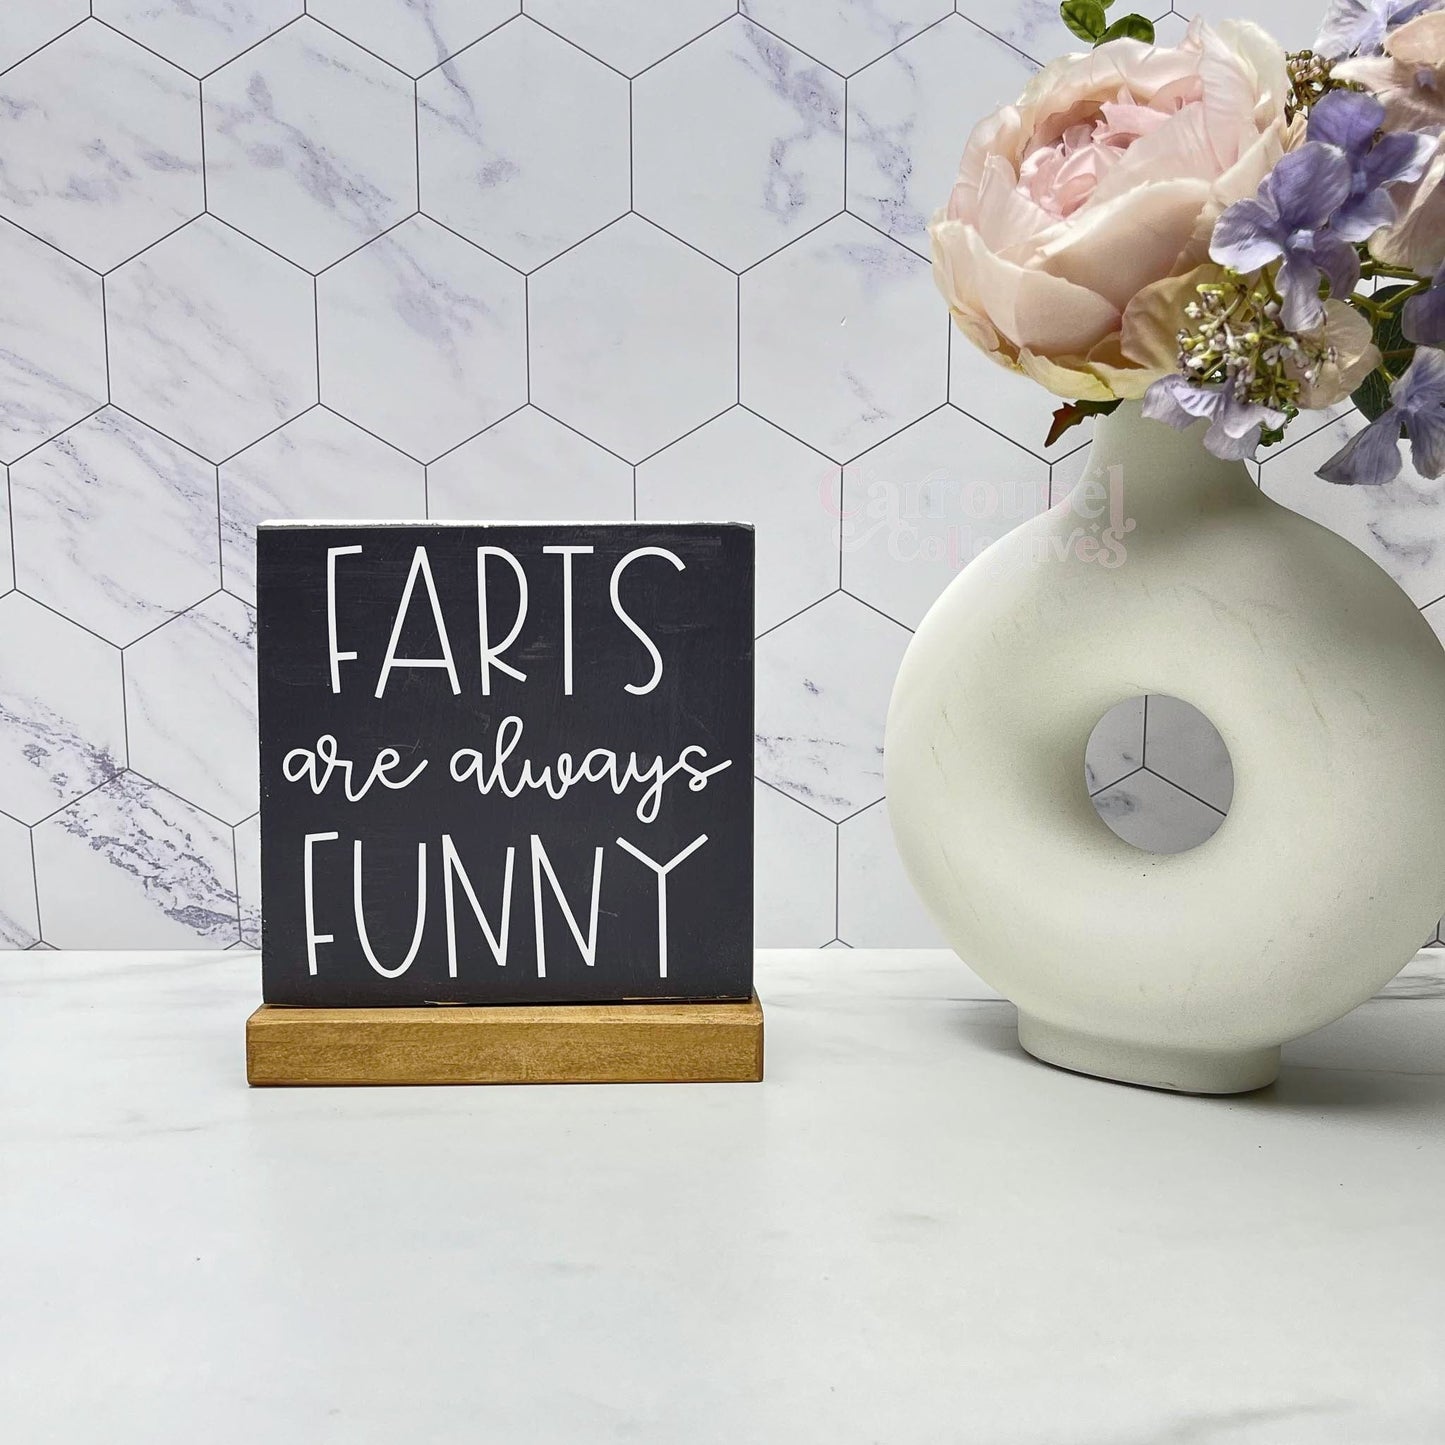 Farts are always funny wood sign, bathroom wood sign, bathroom decor